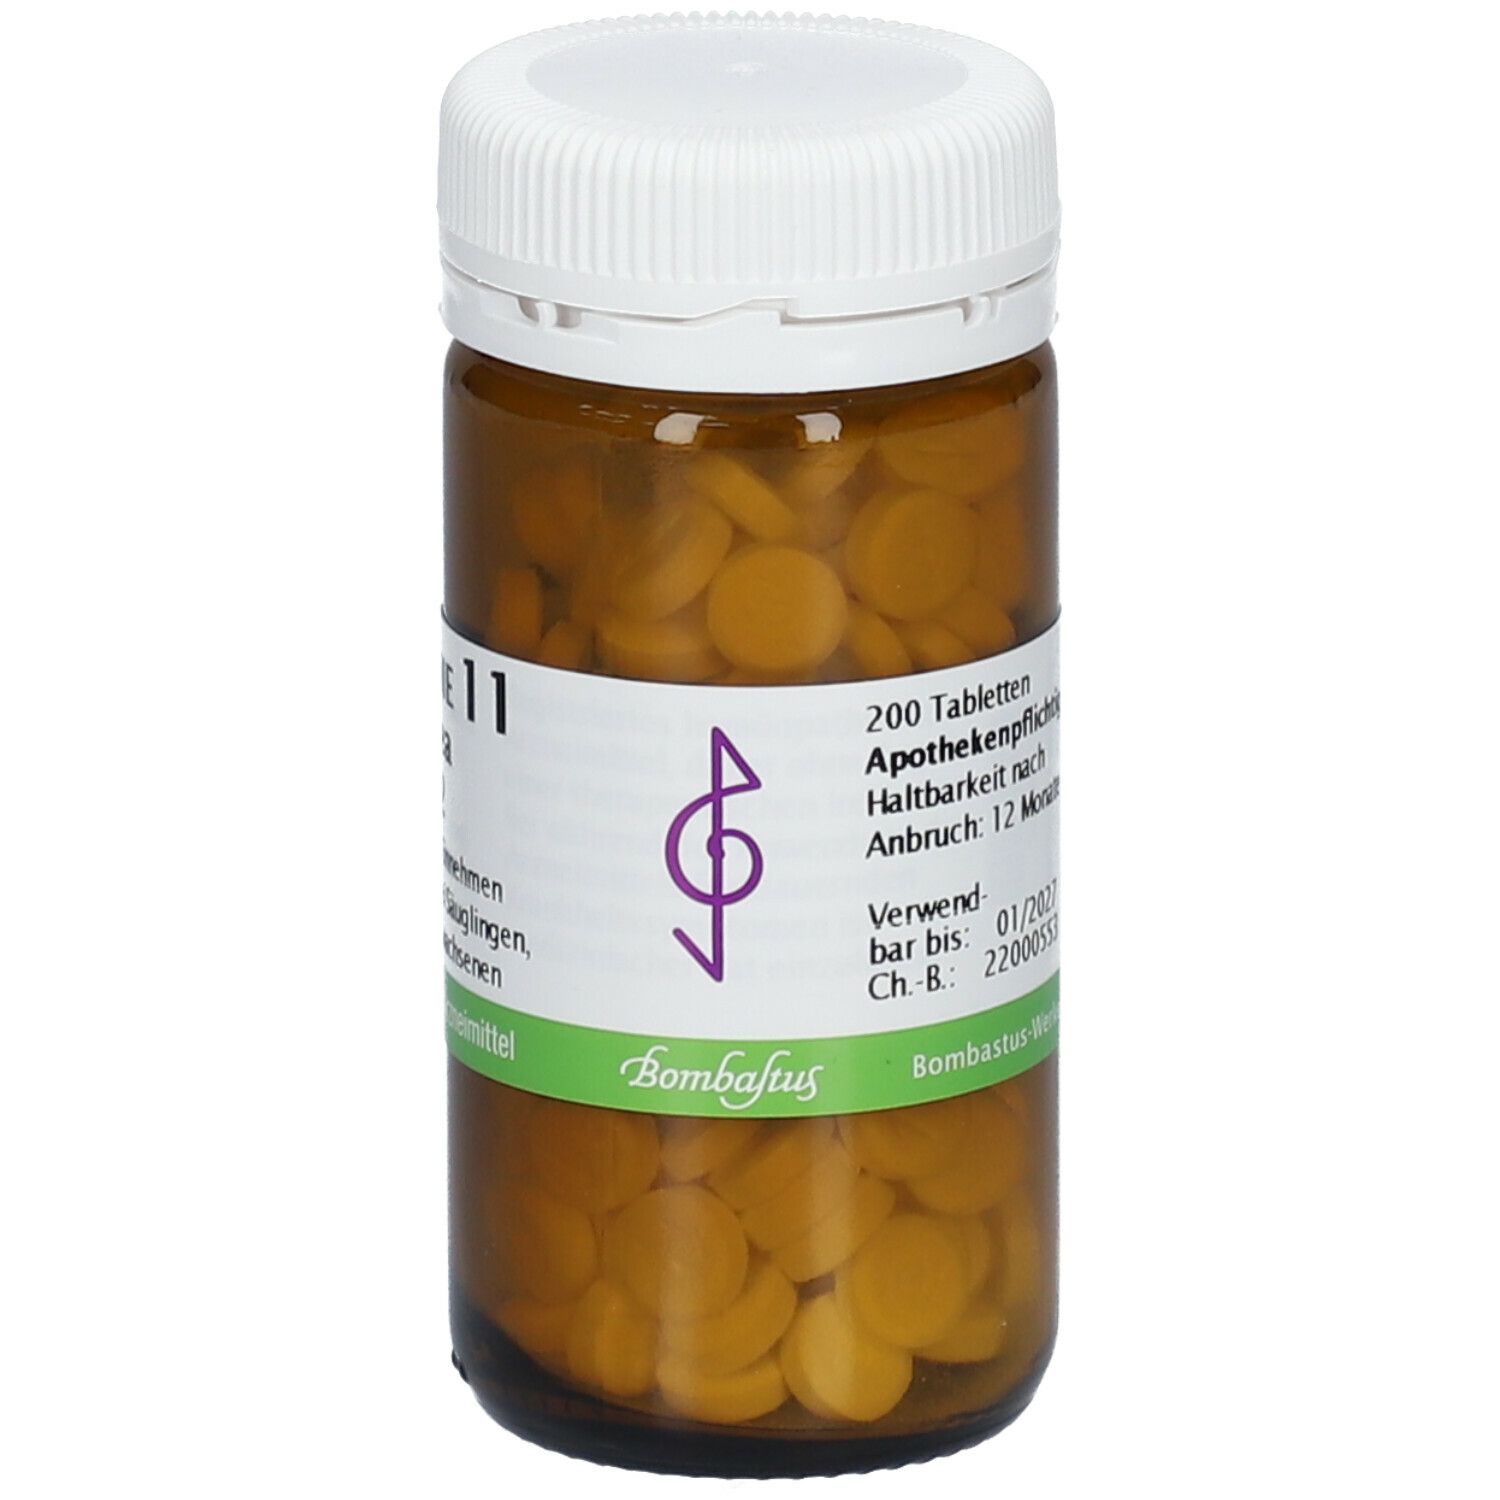 Bombastus Biochemie 11 Silicea D12 Tabletten